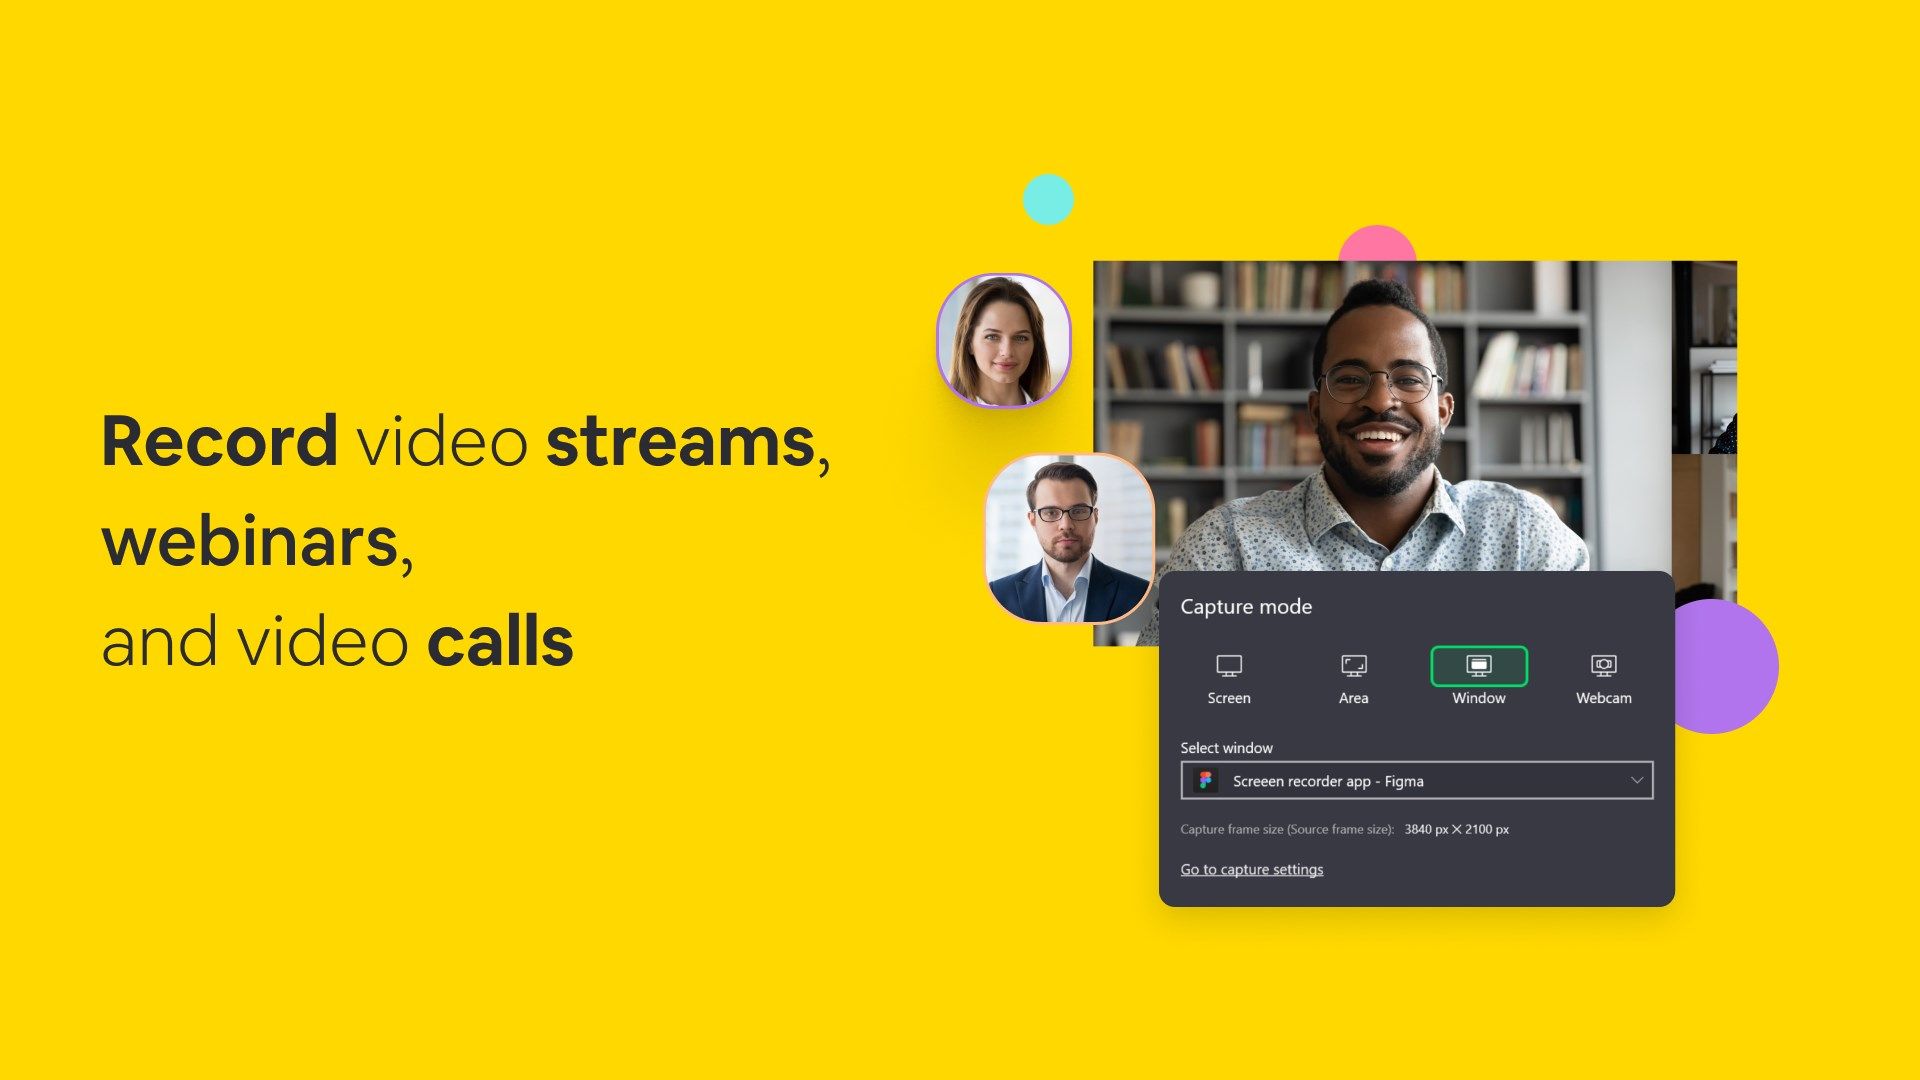 ScreenMix - Record video streams, webinars, video calls